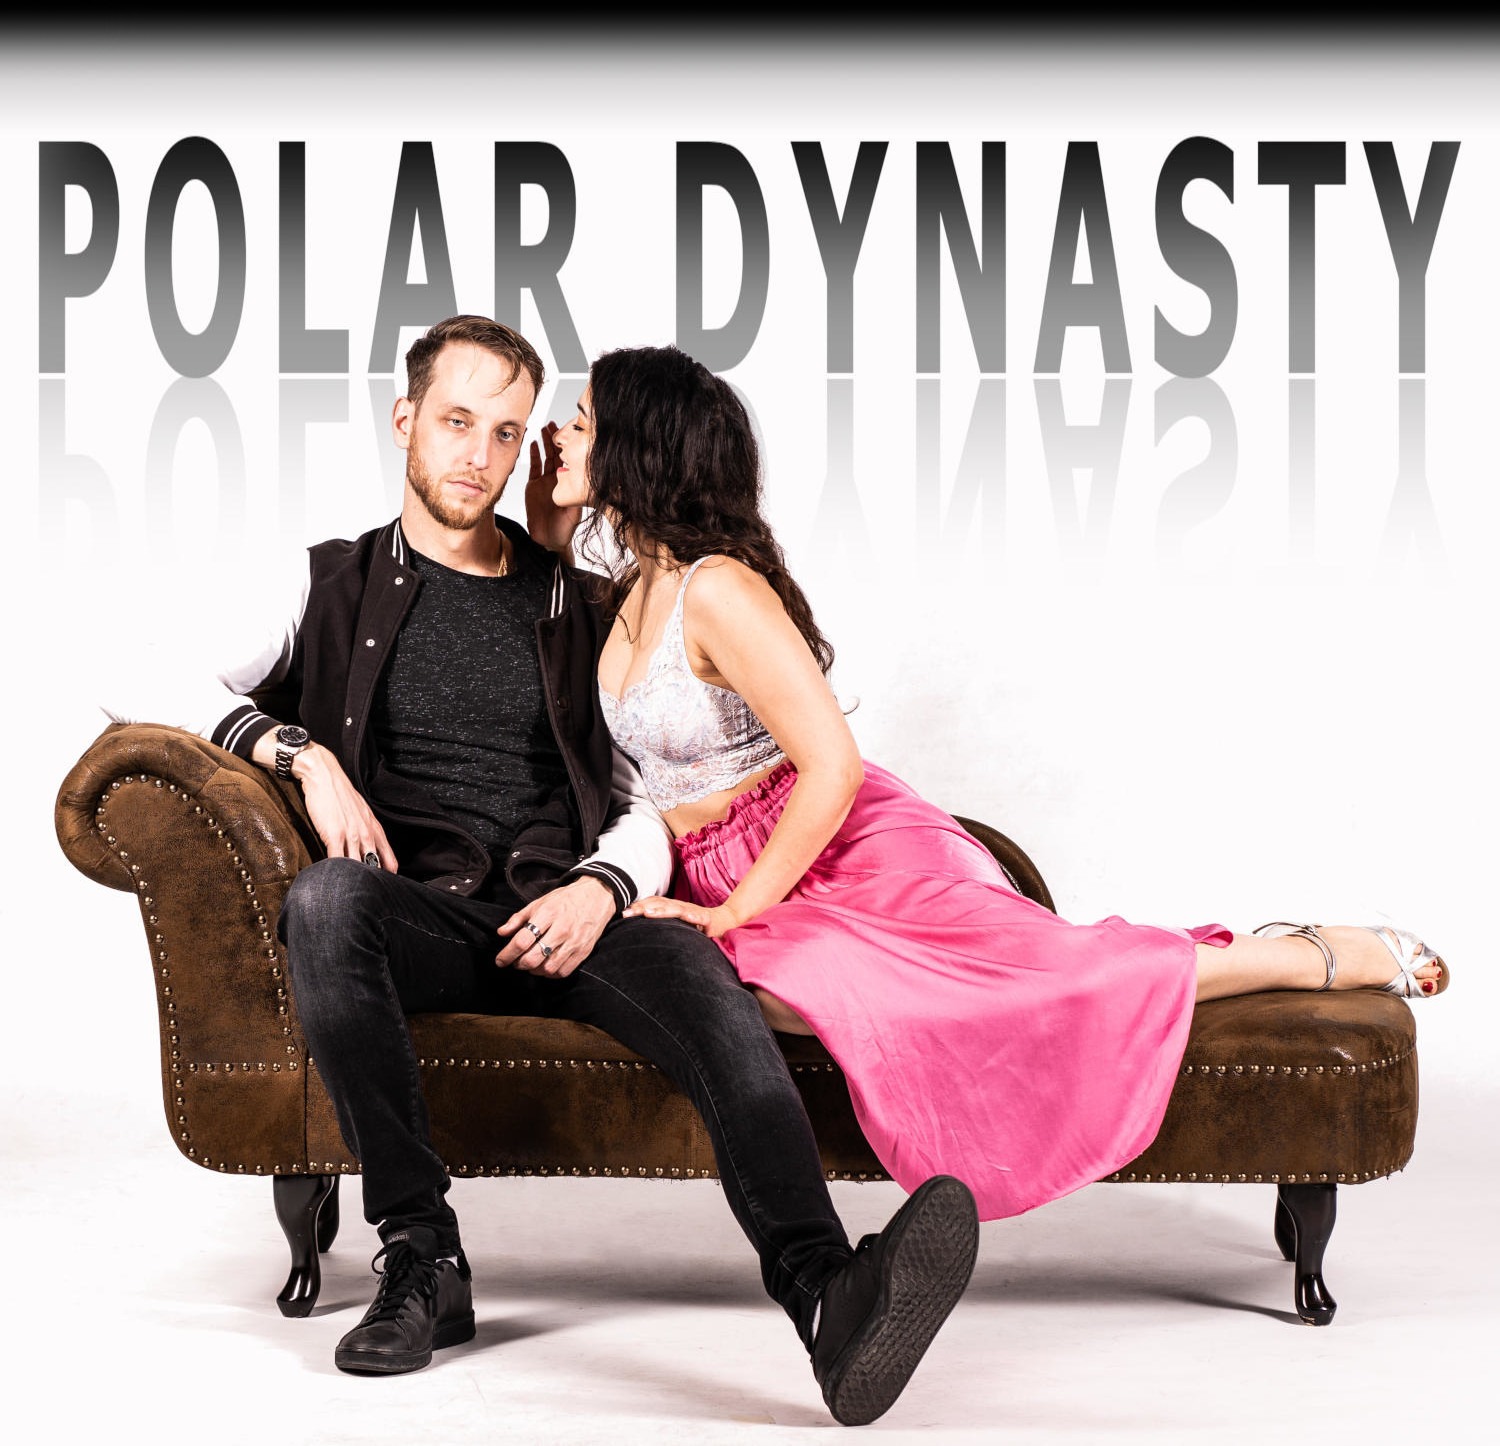 Polar Dynasty Title Image